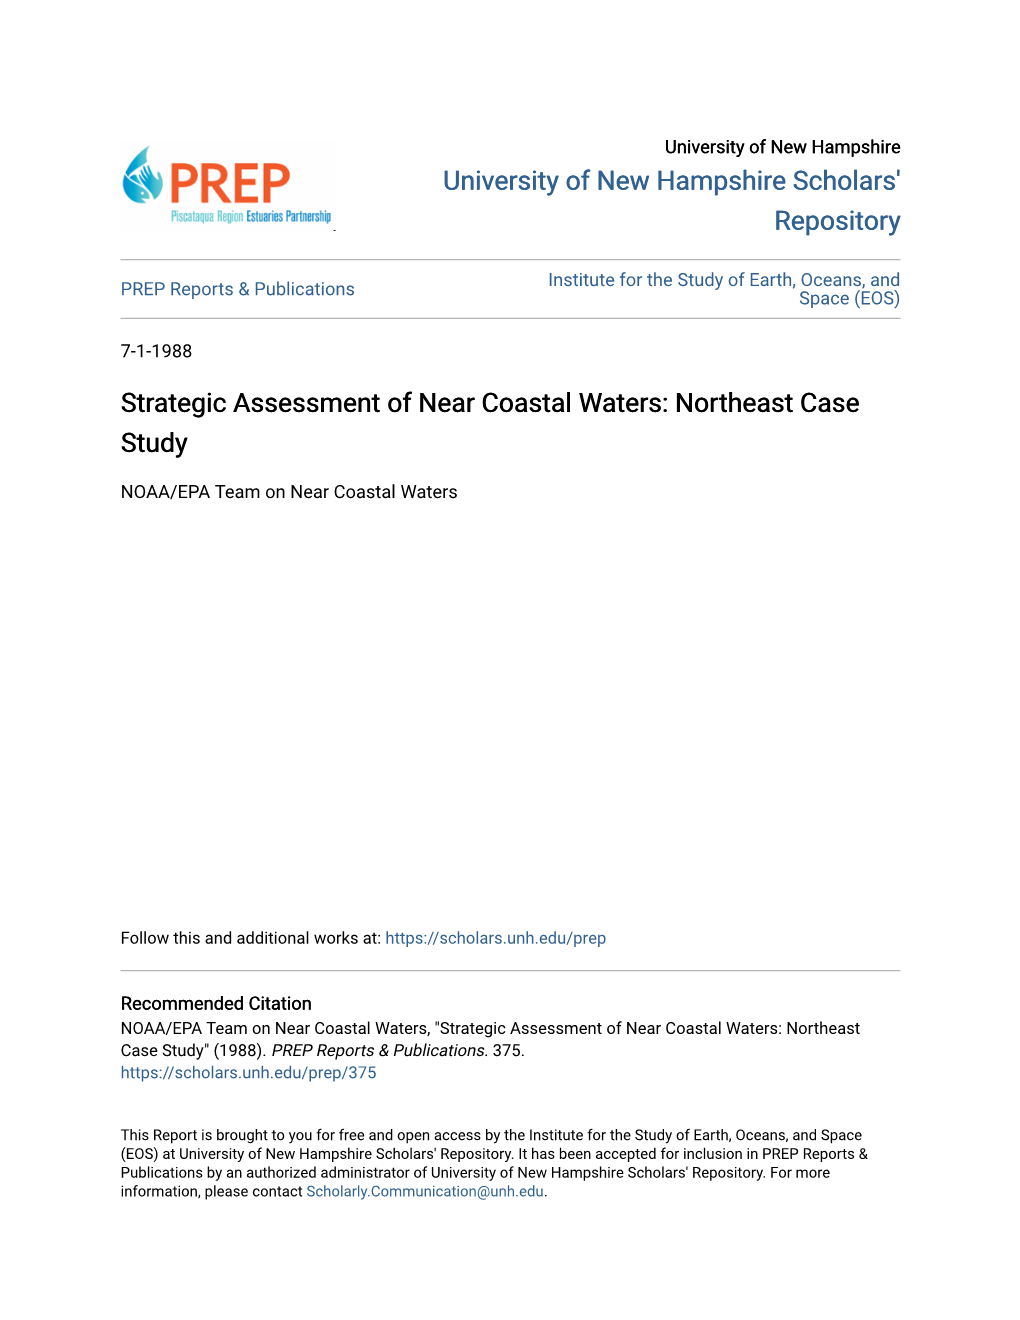 Strategic Assessment of Near Coastal Waters: Northeast Case Study